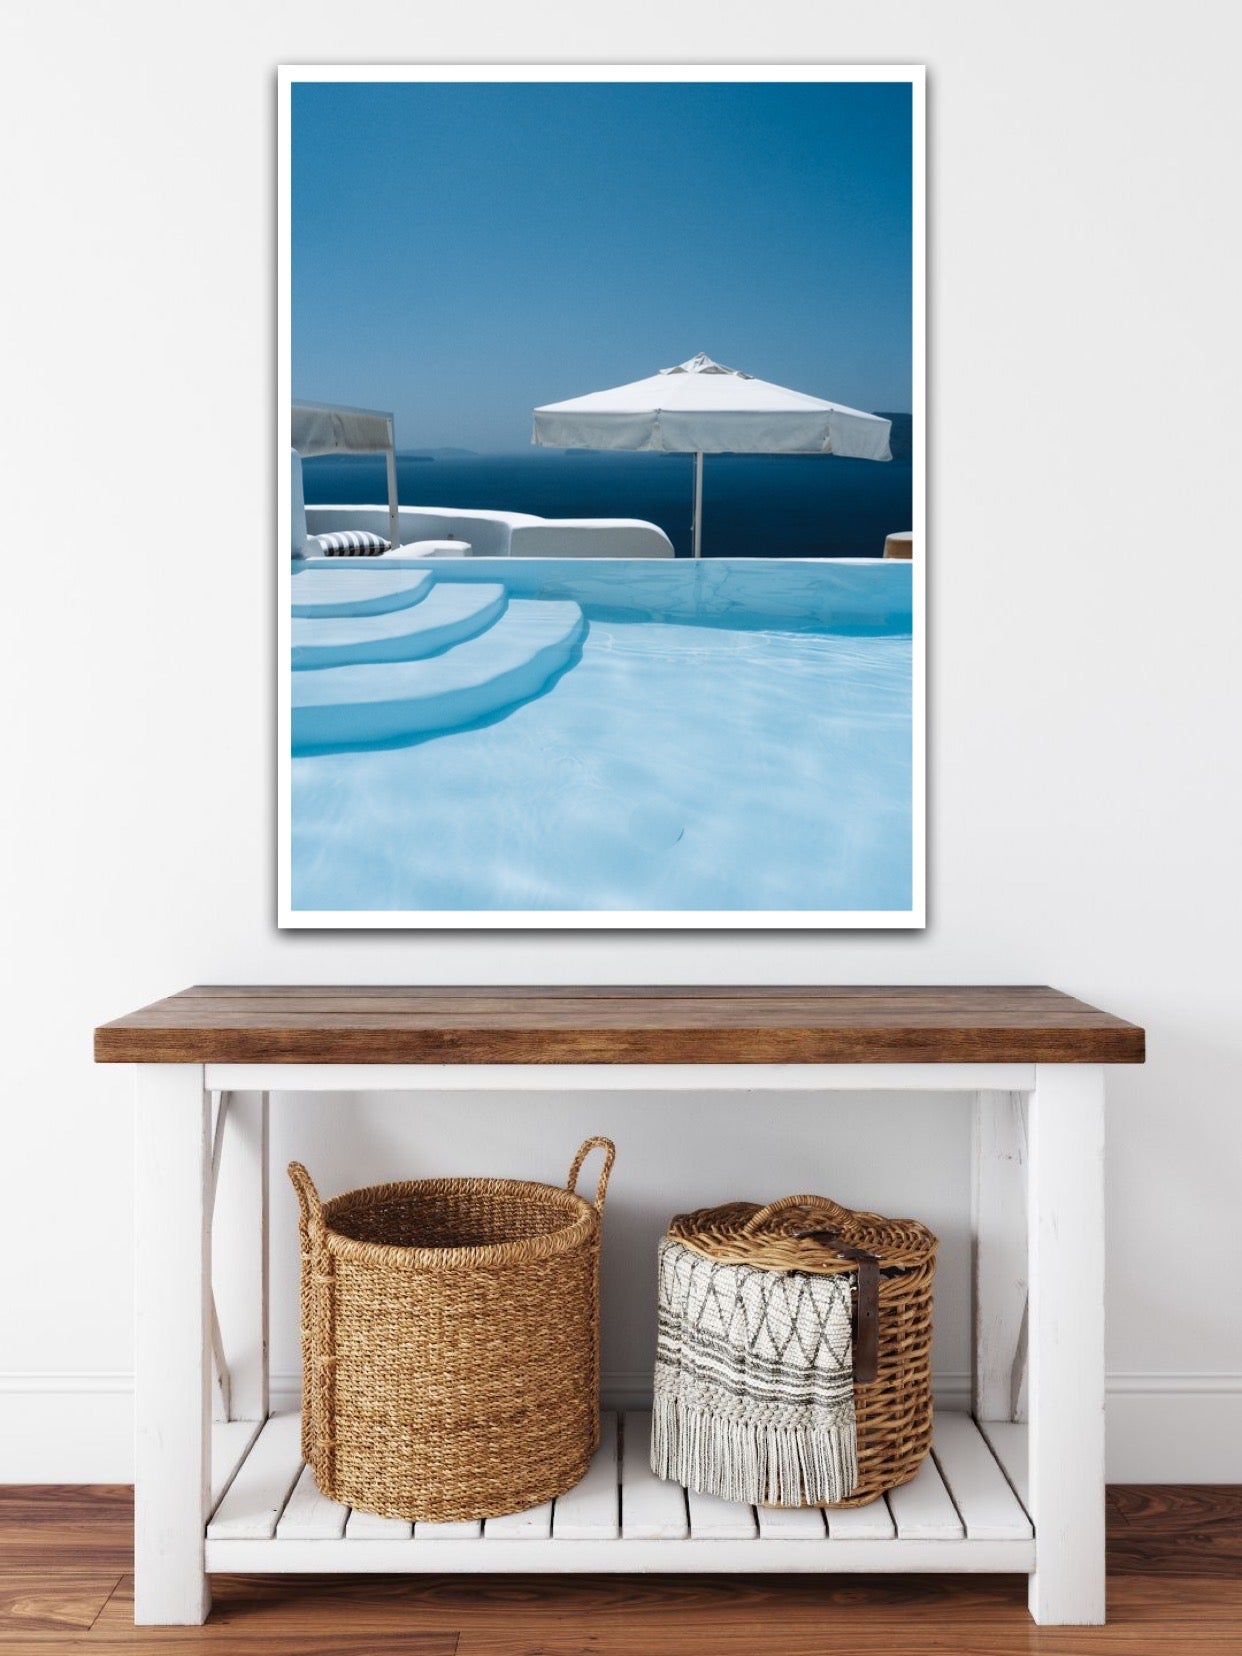 Poolside infinity pool at luxury hotel in Oia Santorini Kirini Suites and Spa.  Caldera views